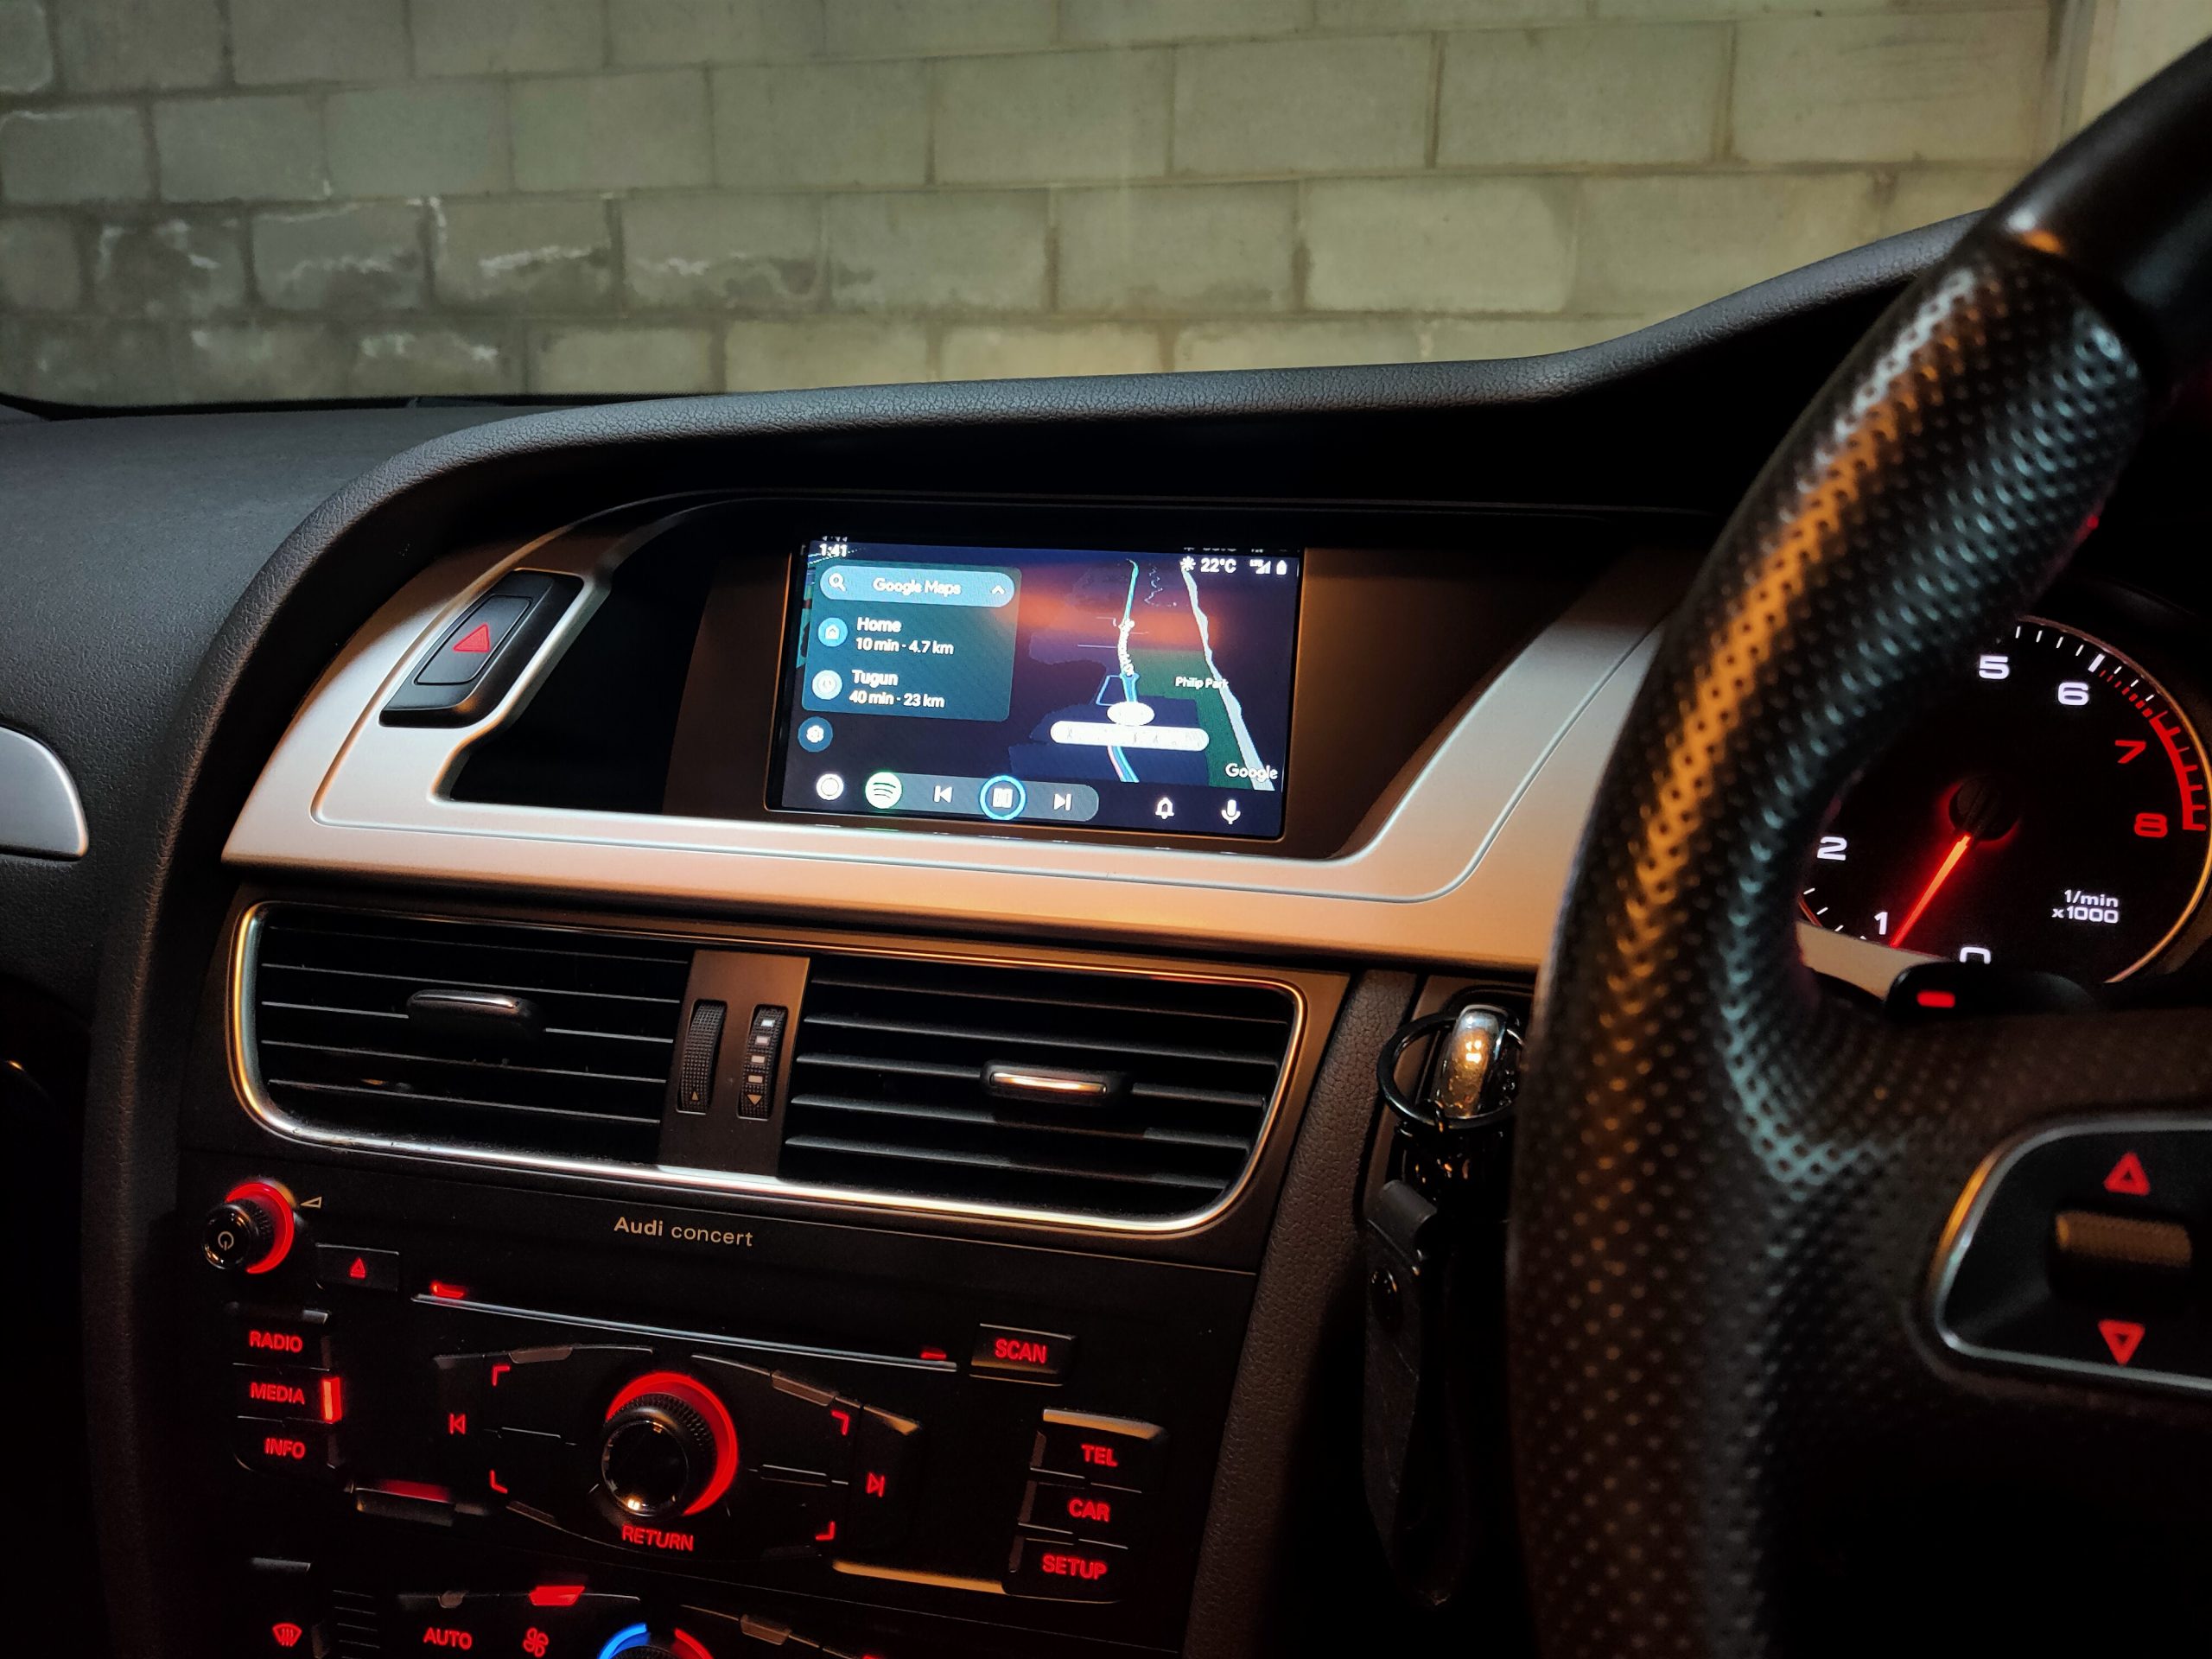 Audi Concert Non-MMI Android Auto and Wireless Apple CarPlay